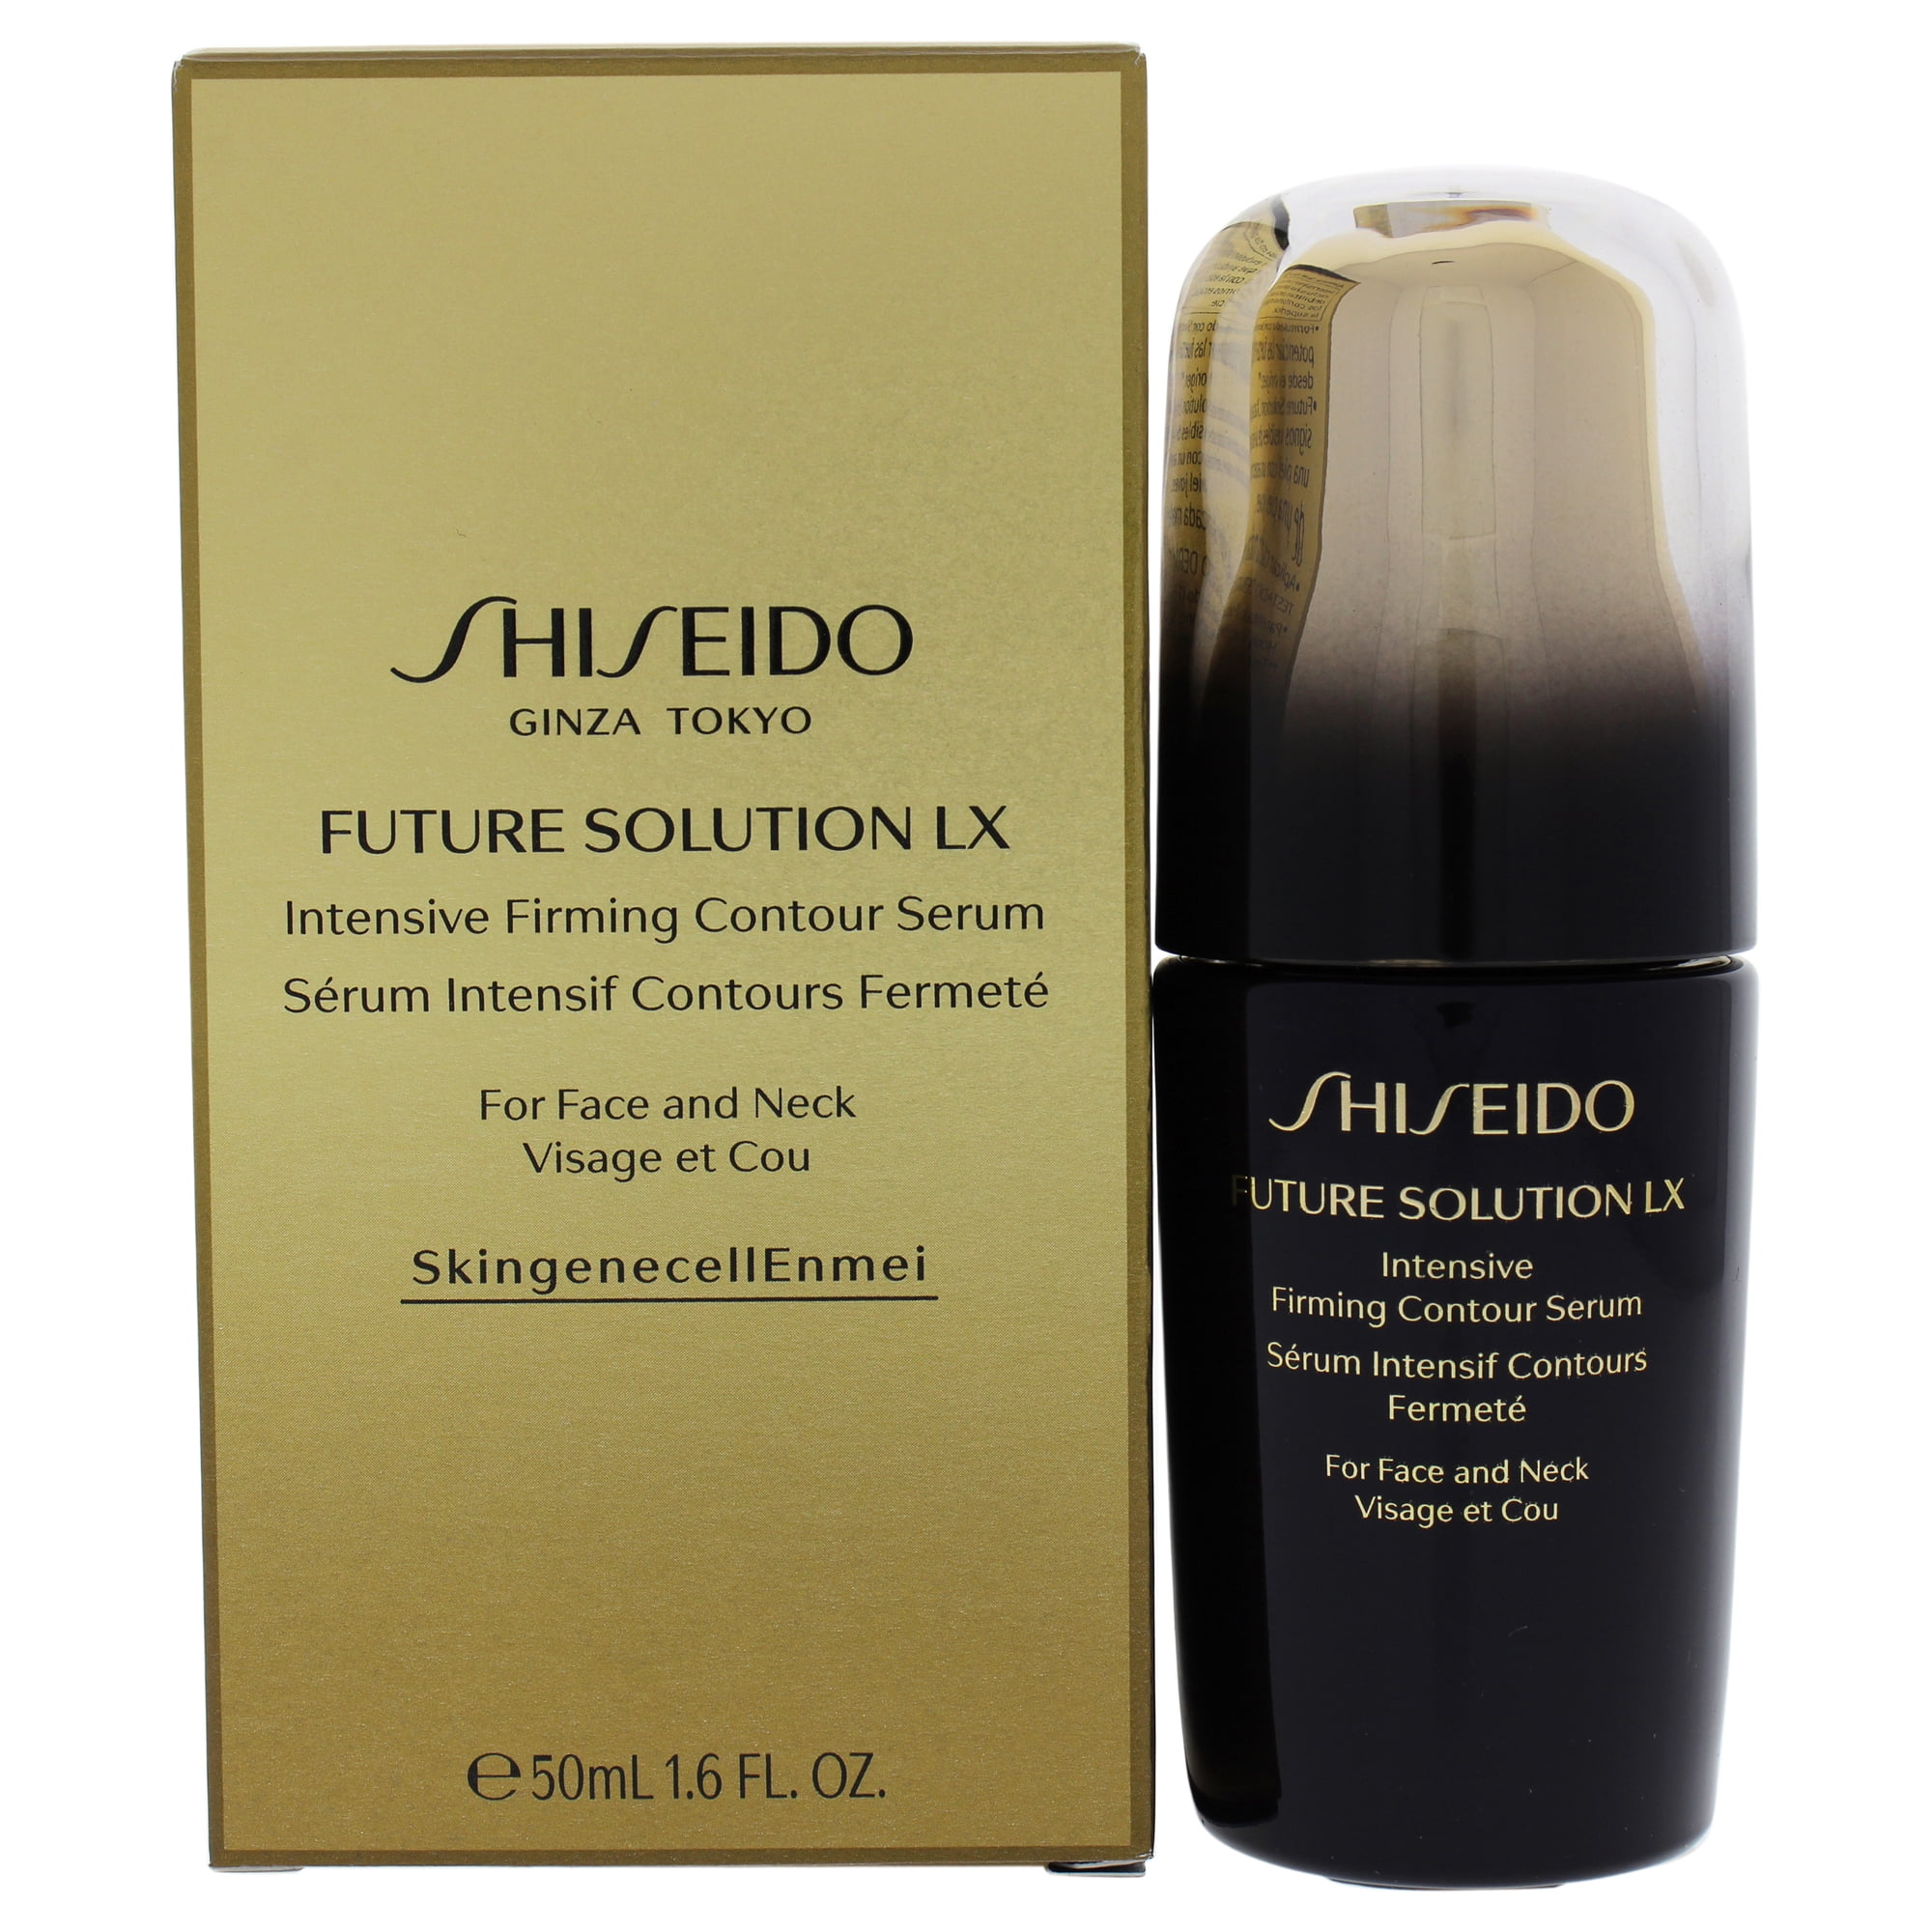 Shiseido Future solution LX Serum. Shiseido Future solution LX ночной крем чье производство. Шисейдо тон Футуре отзывы. Shiseido 101 Ginkgo отзывы. Shiseido firming